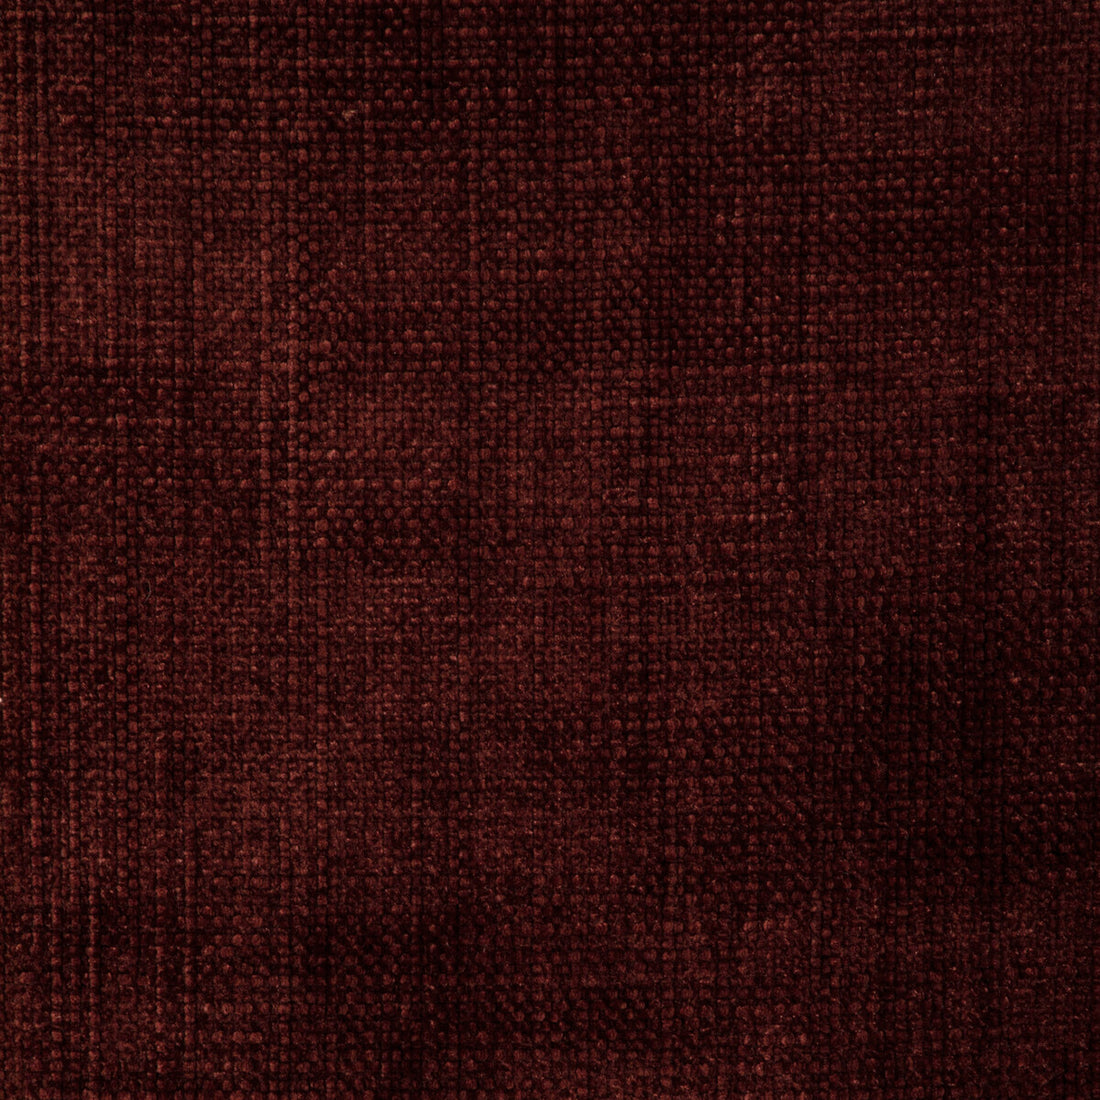 Kravet Smart fabric in 36991-9 color - pattern 36991.9.0 - by Kravet Smart in the Performance Kravetarmor collection